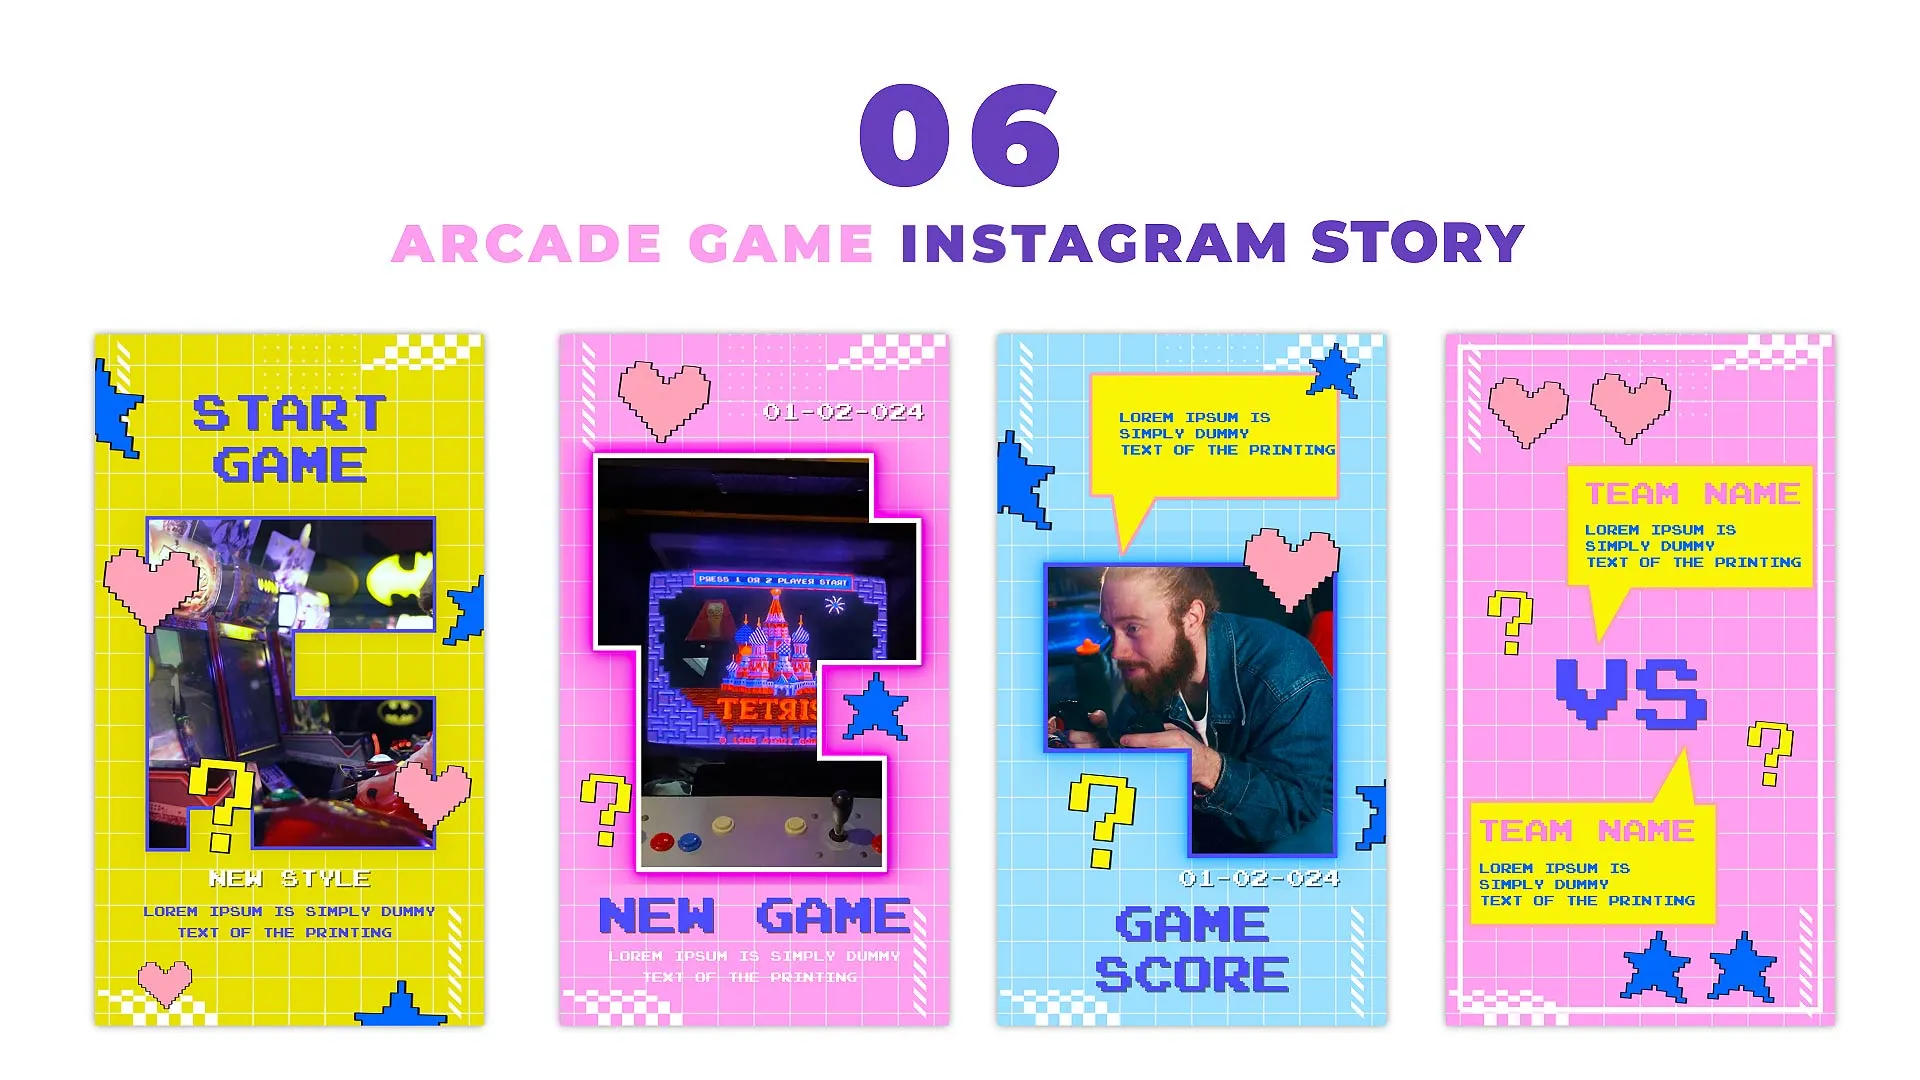 Arcade Games Pixelated Background IG Story